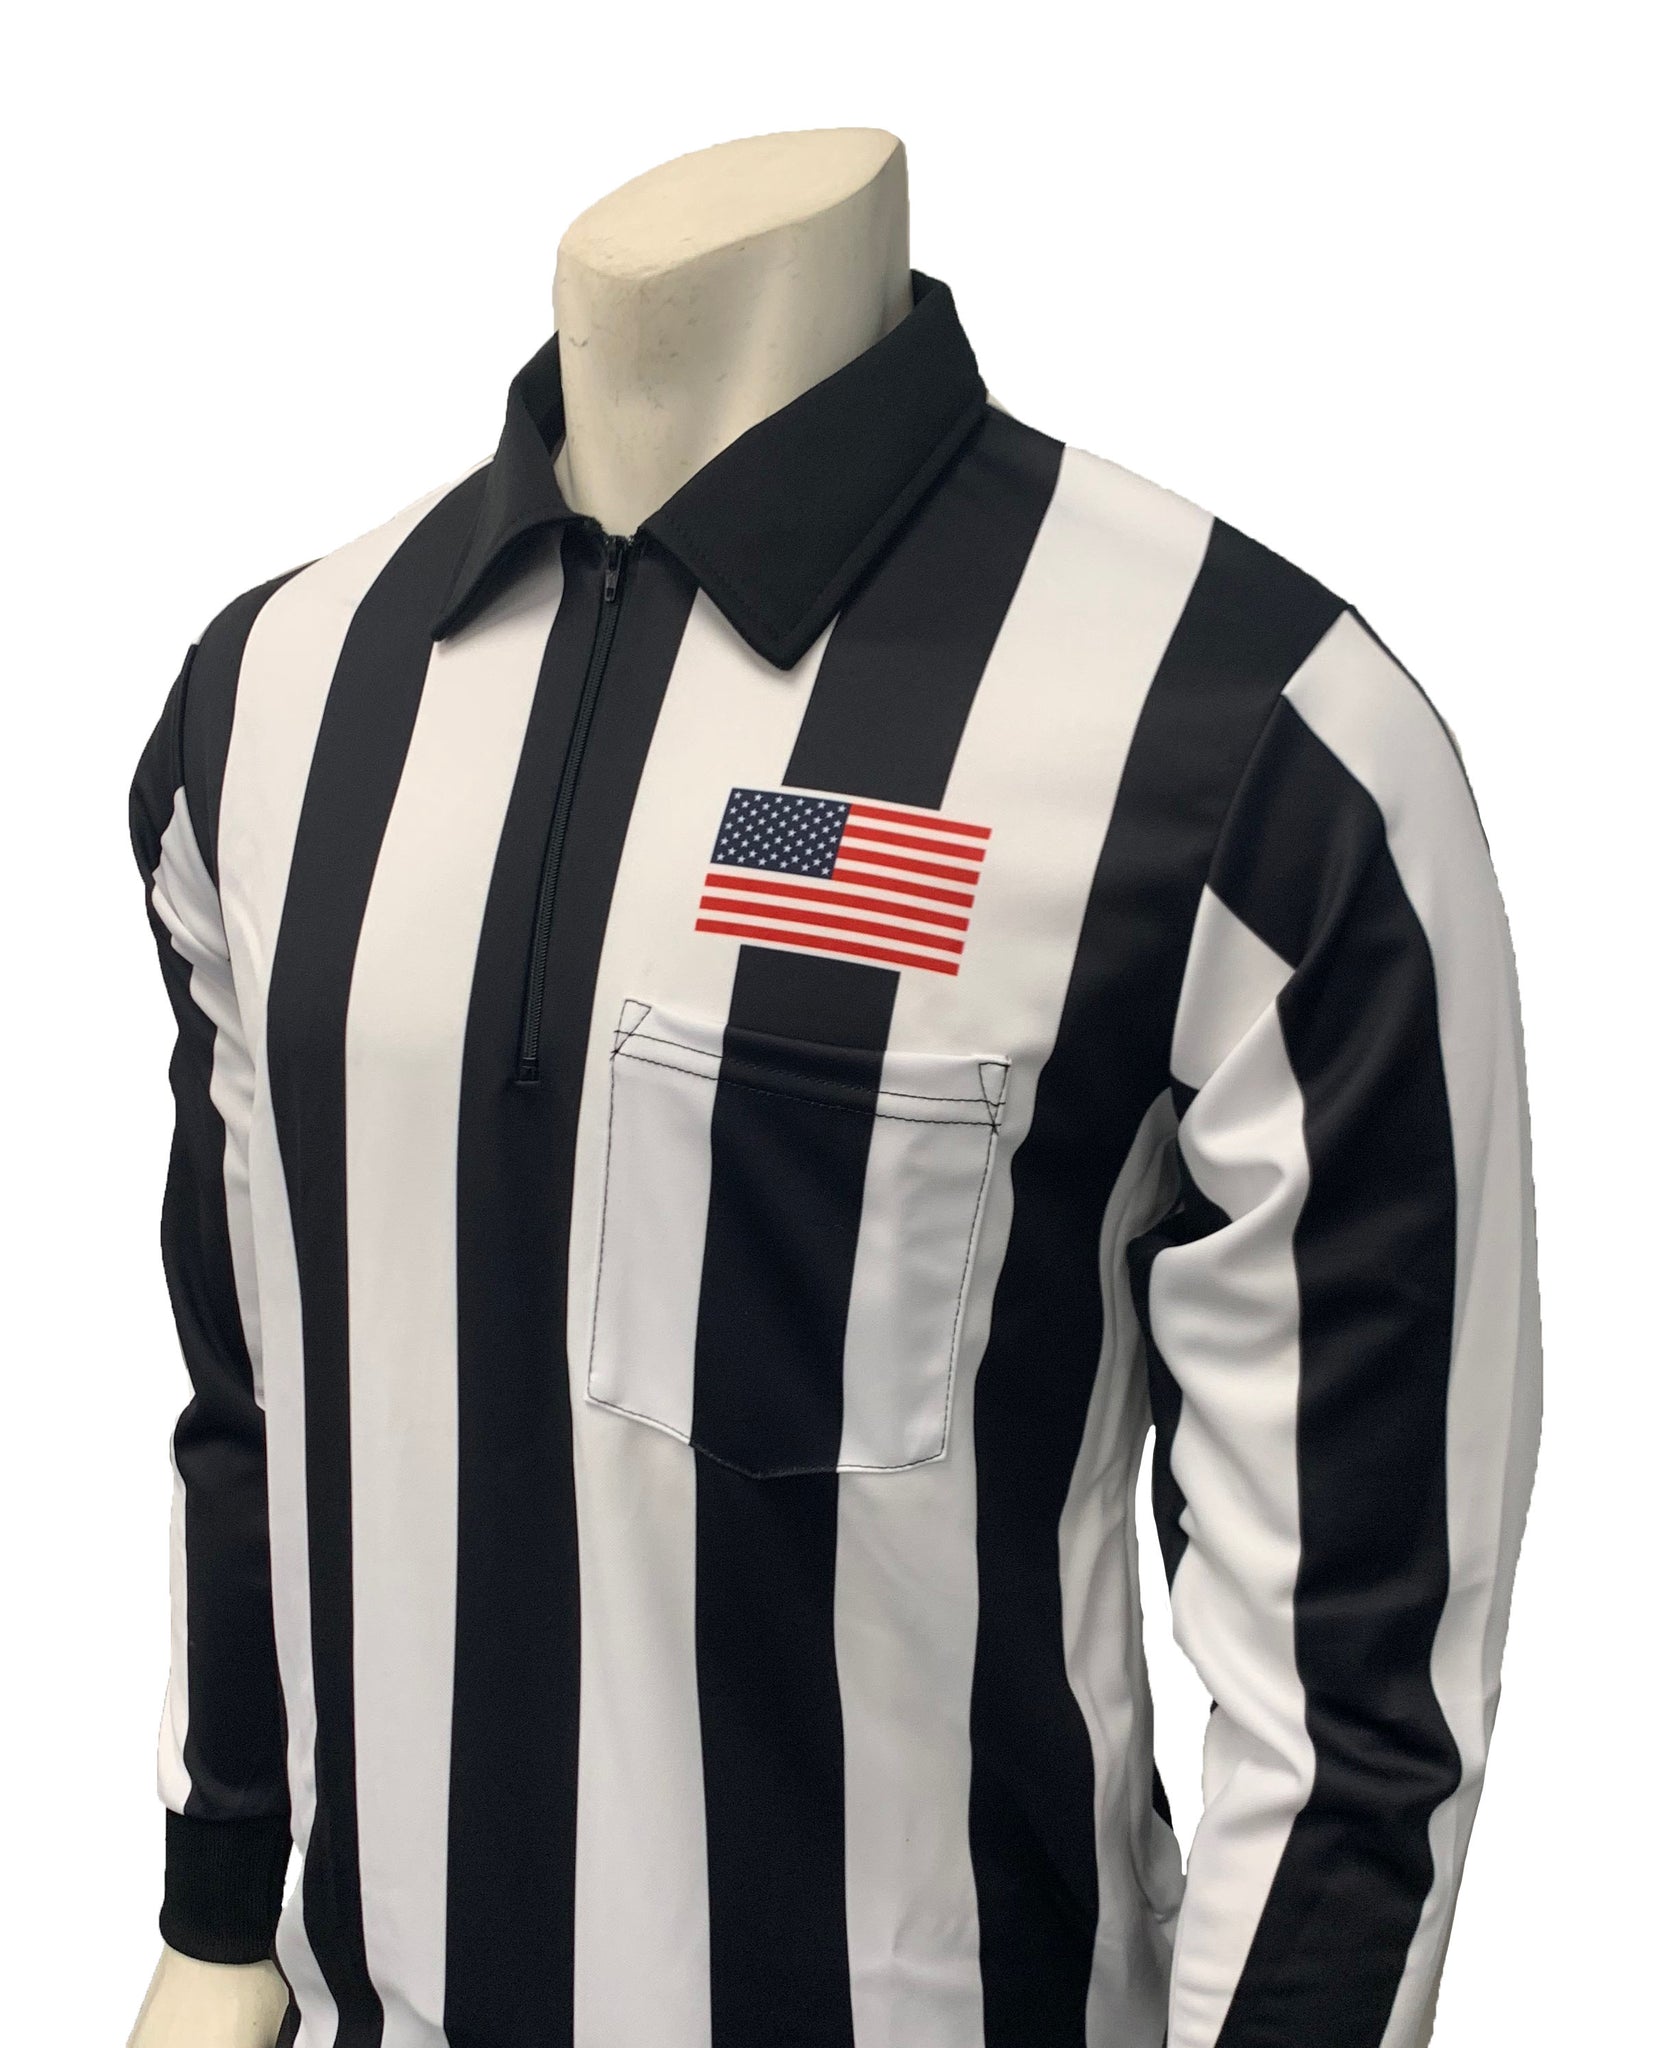 USA118 - Smitty "Made in USA" - Dye Sub Football Long Sleeve Shirt w/ Flag Above Pocket